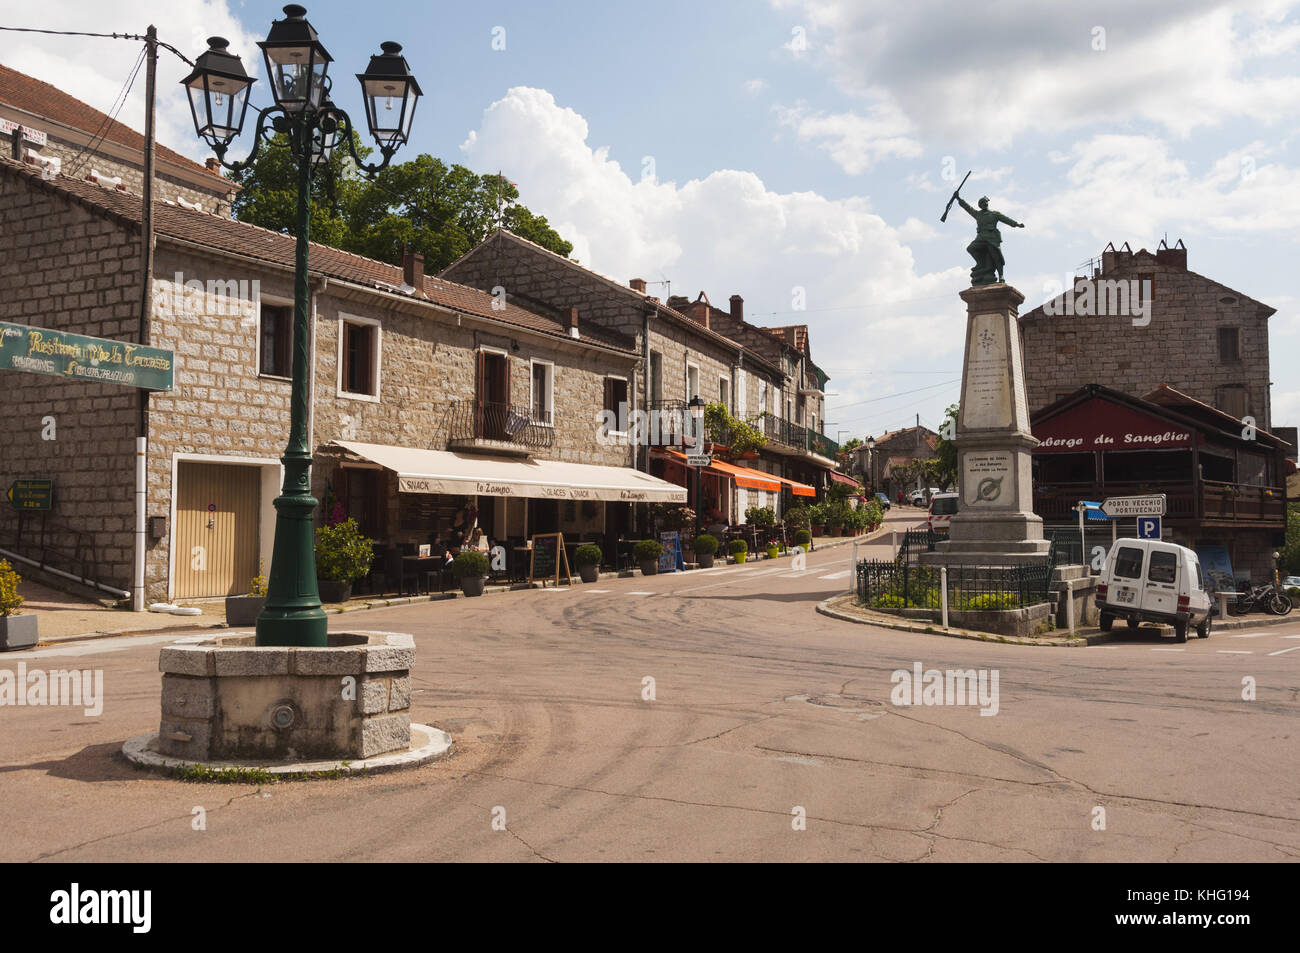 France, Corsica, Zonza, town street scene Stock Photo